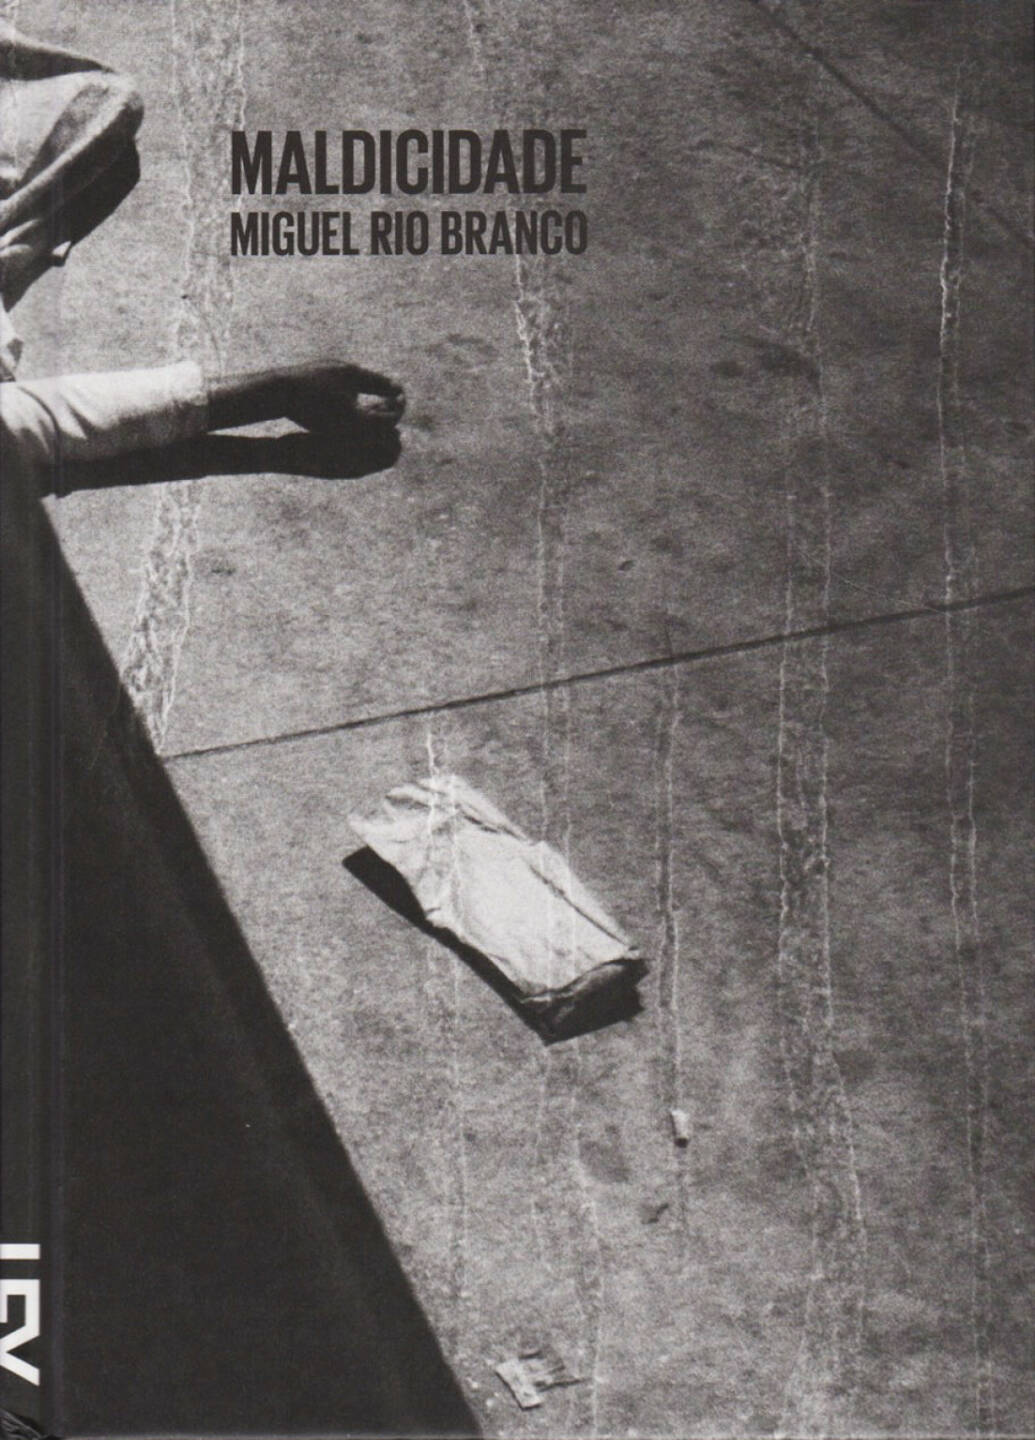 Miguel Rio Branco - Maldicidade, Cosac Naify 2014, Cover - http://josefchladek.com/book/miguel_rio_branco_-_maldicidade